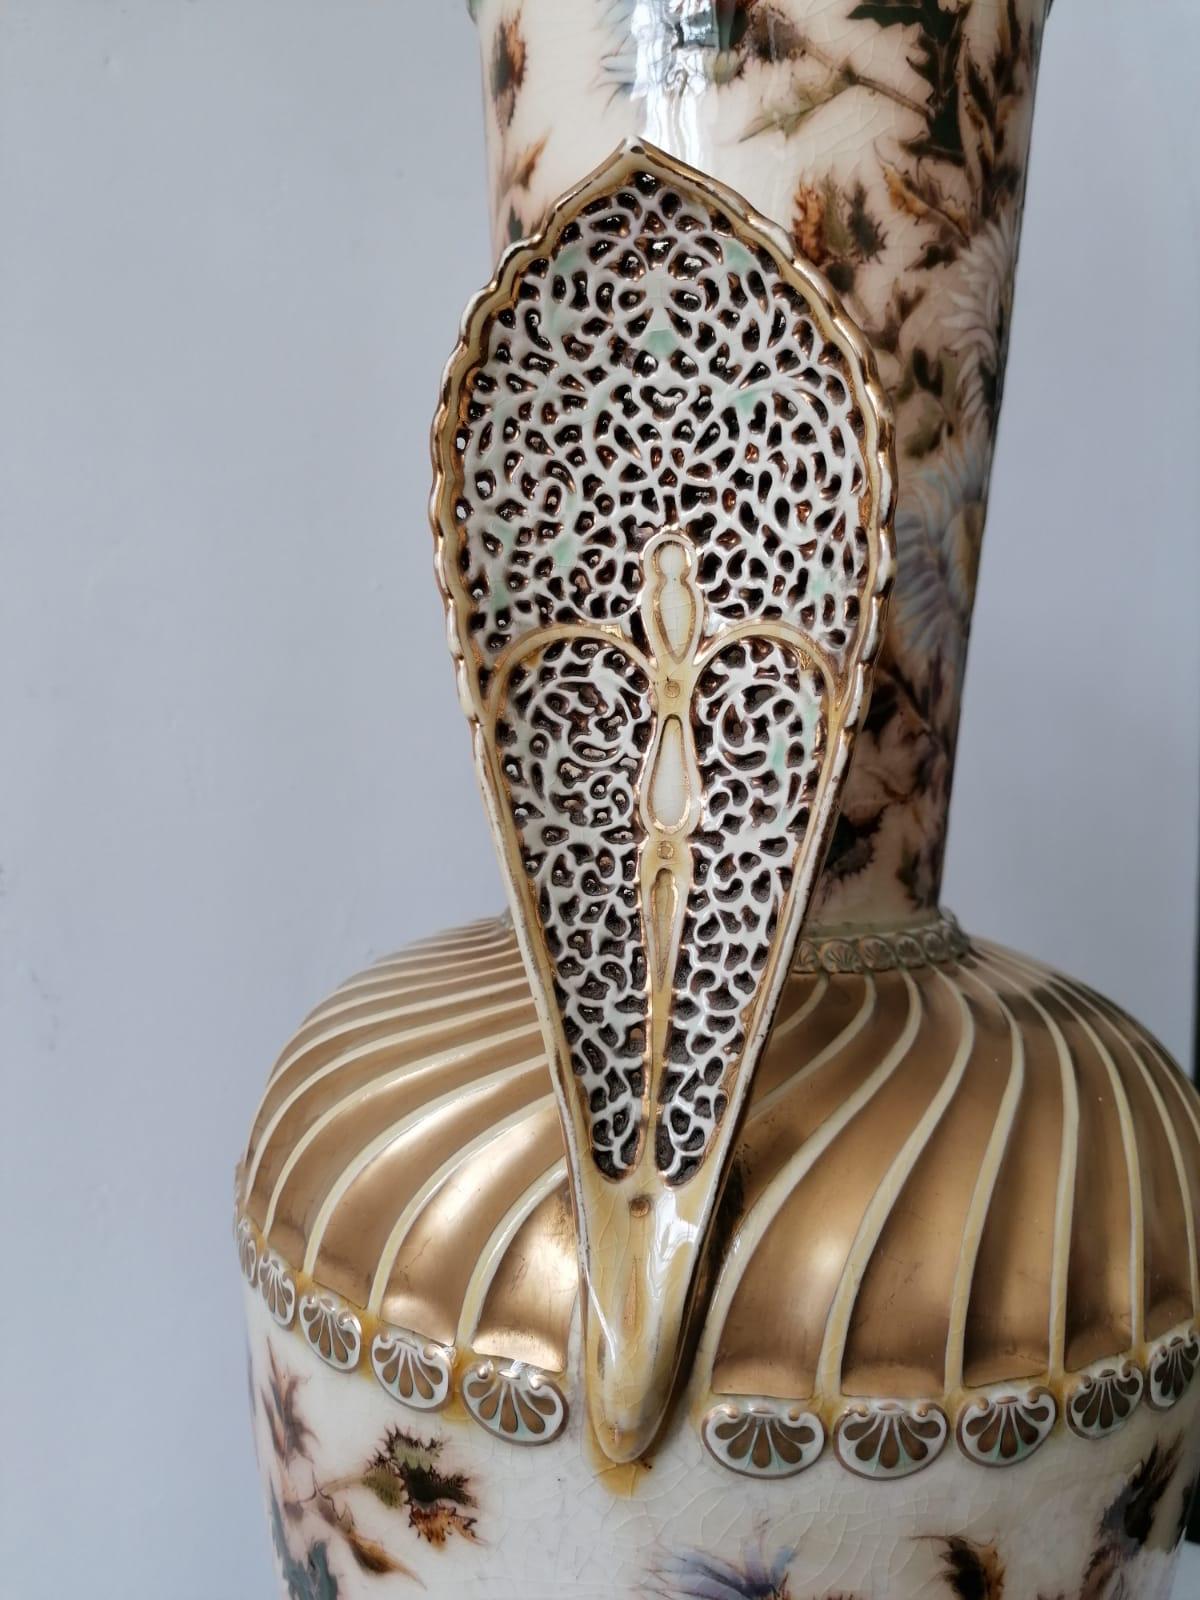 Large Vase by Zsolnay 1